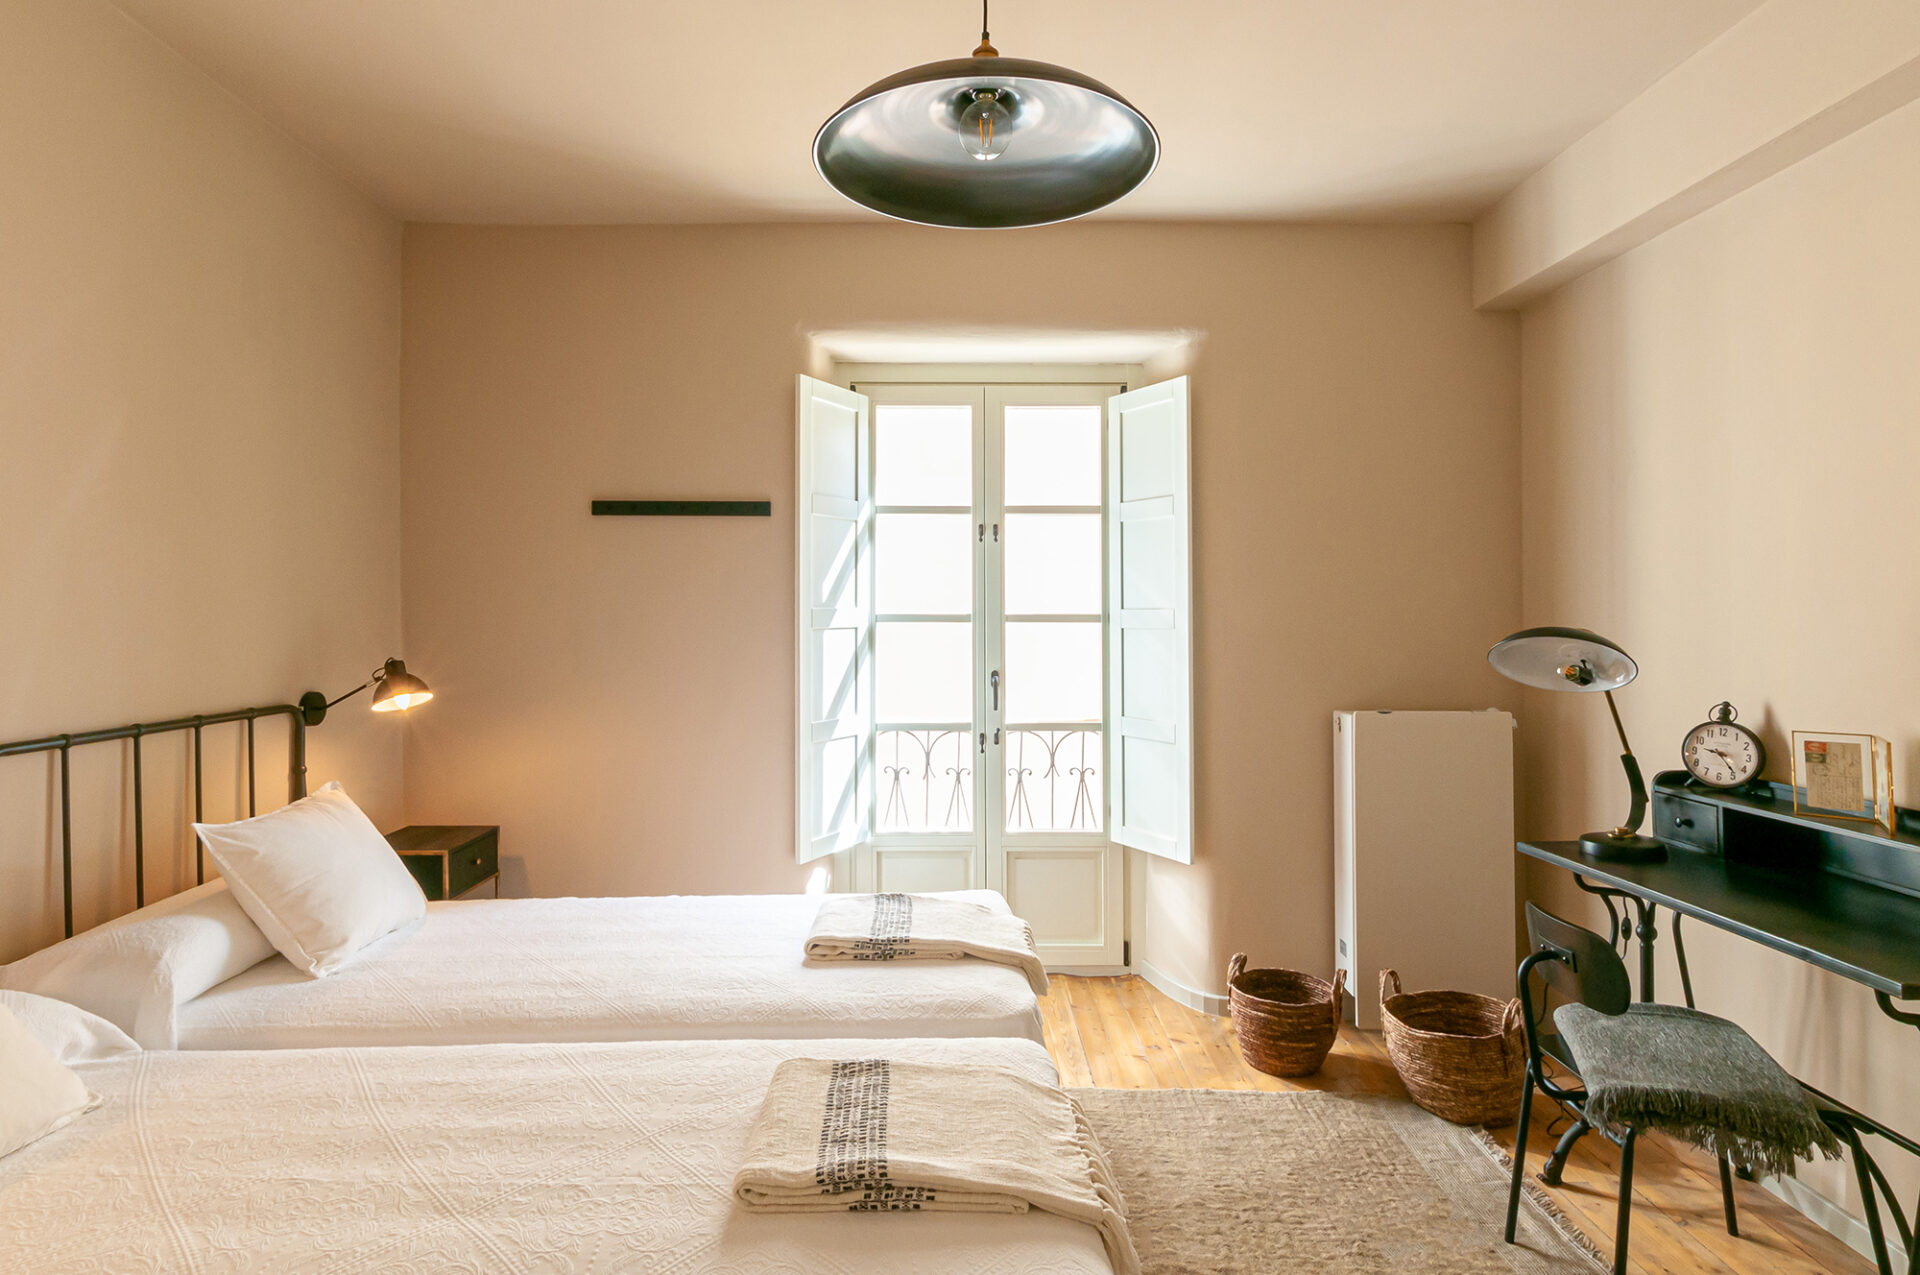 Terravita Ibiza Interior Design Architecture La Casona Asturias Bed Room